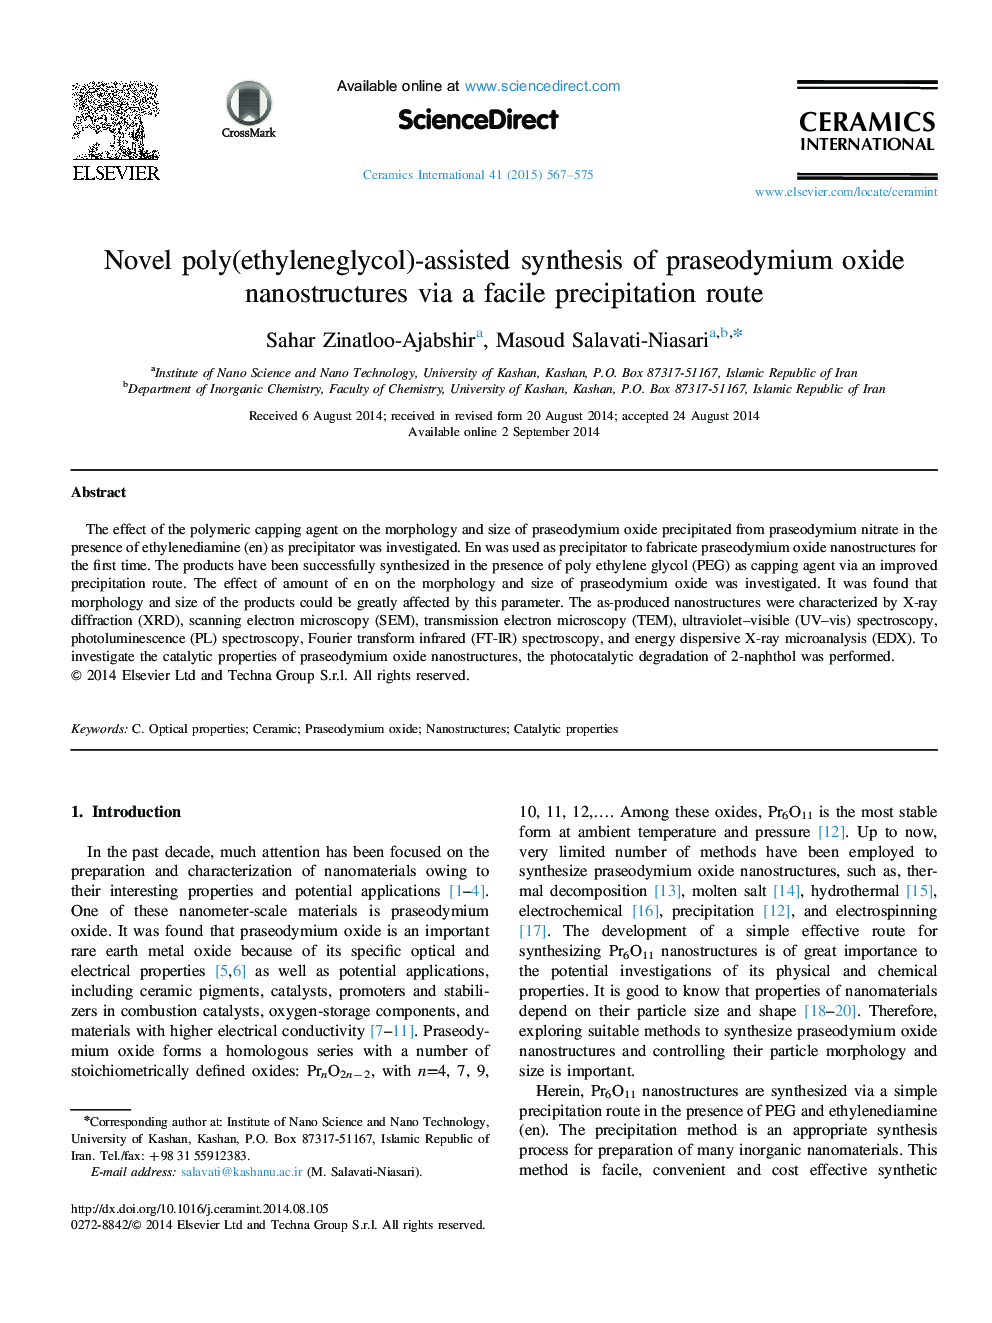 Novel poly(ethyleneglycol)-assisted synthesis of praseodymium oxide nanostructures via a facile precipitation route